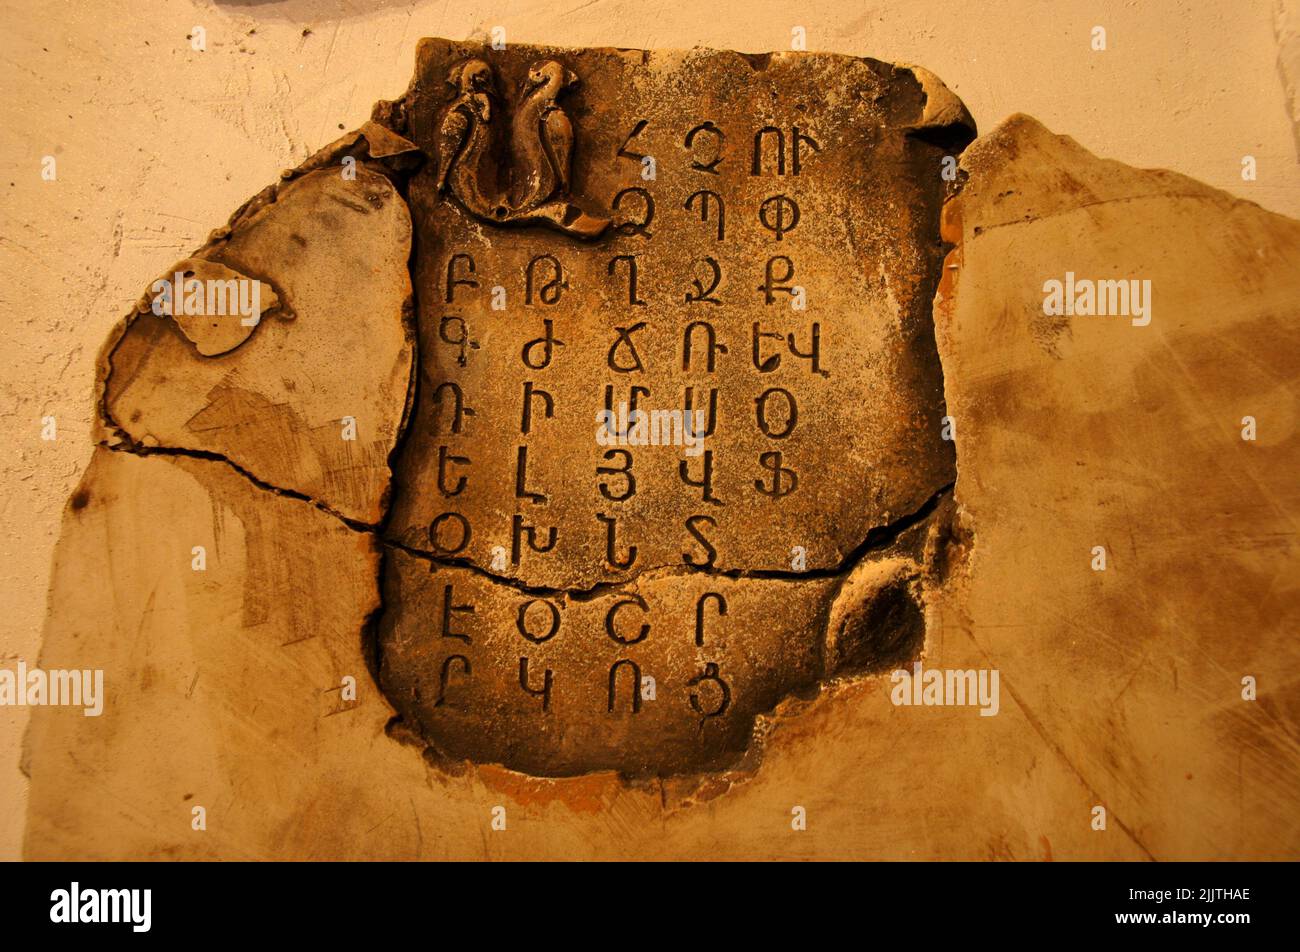 An engraving of the Armenian alphabet in the Matenadaran - Mesrop Mashtots Institute of Ancient Manuscripts in Armenia Stock Photo